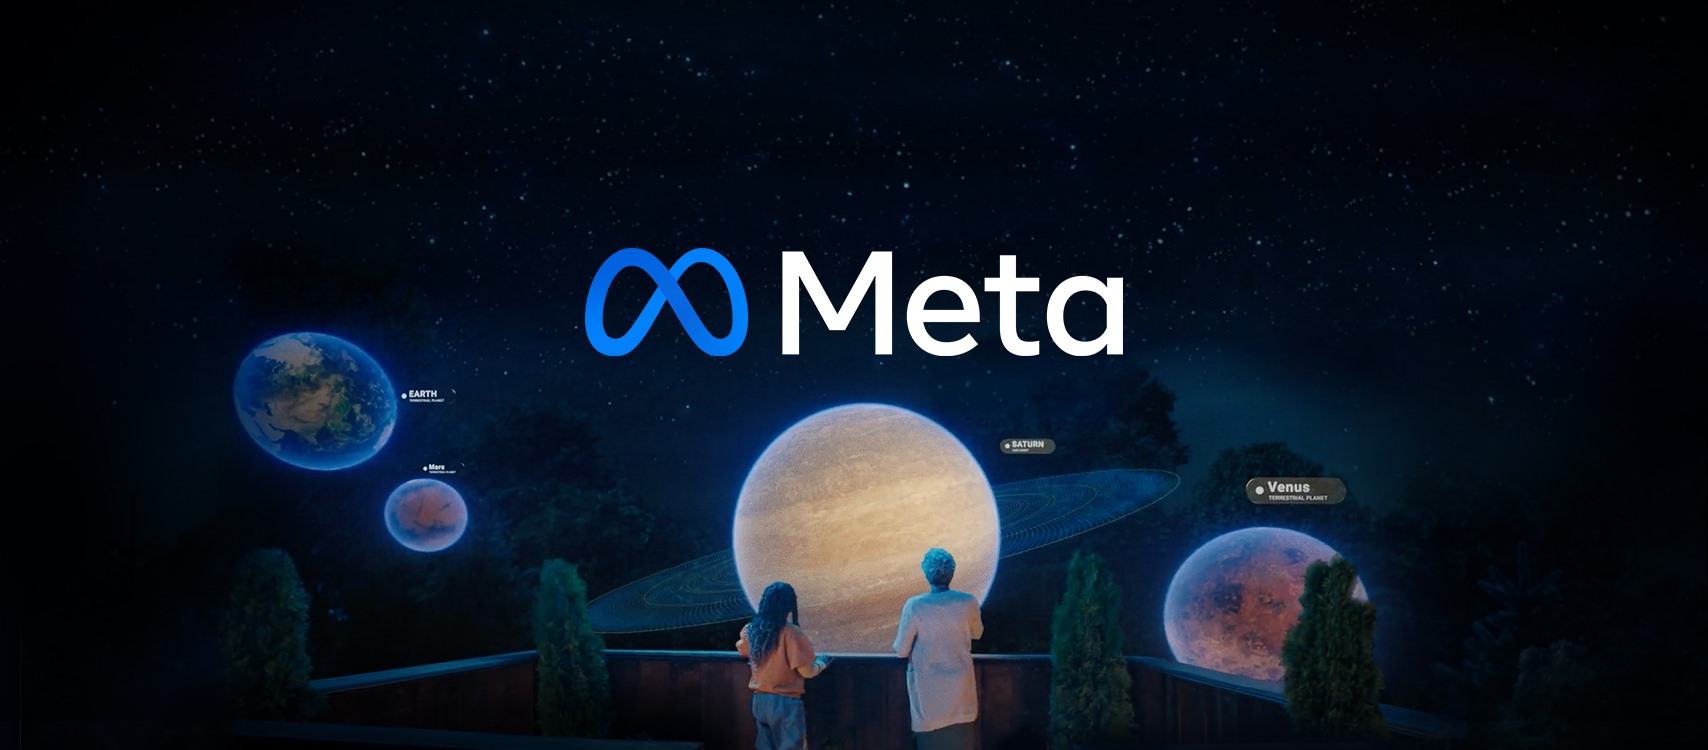 Facebook rebrands as 'Meta' in new focus on metaverse